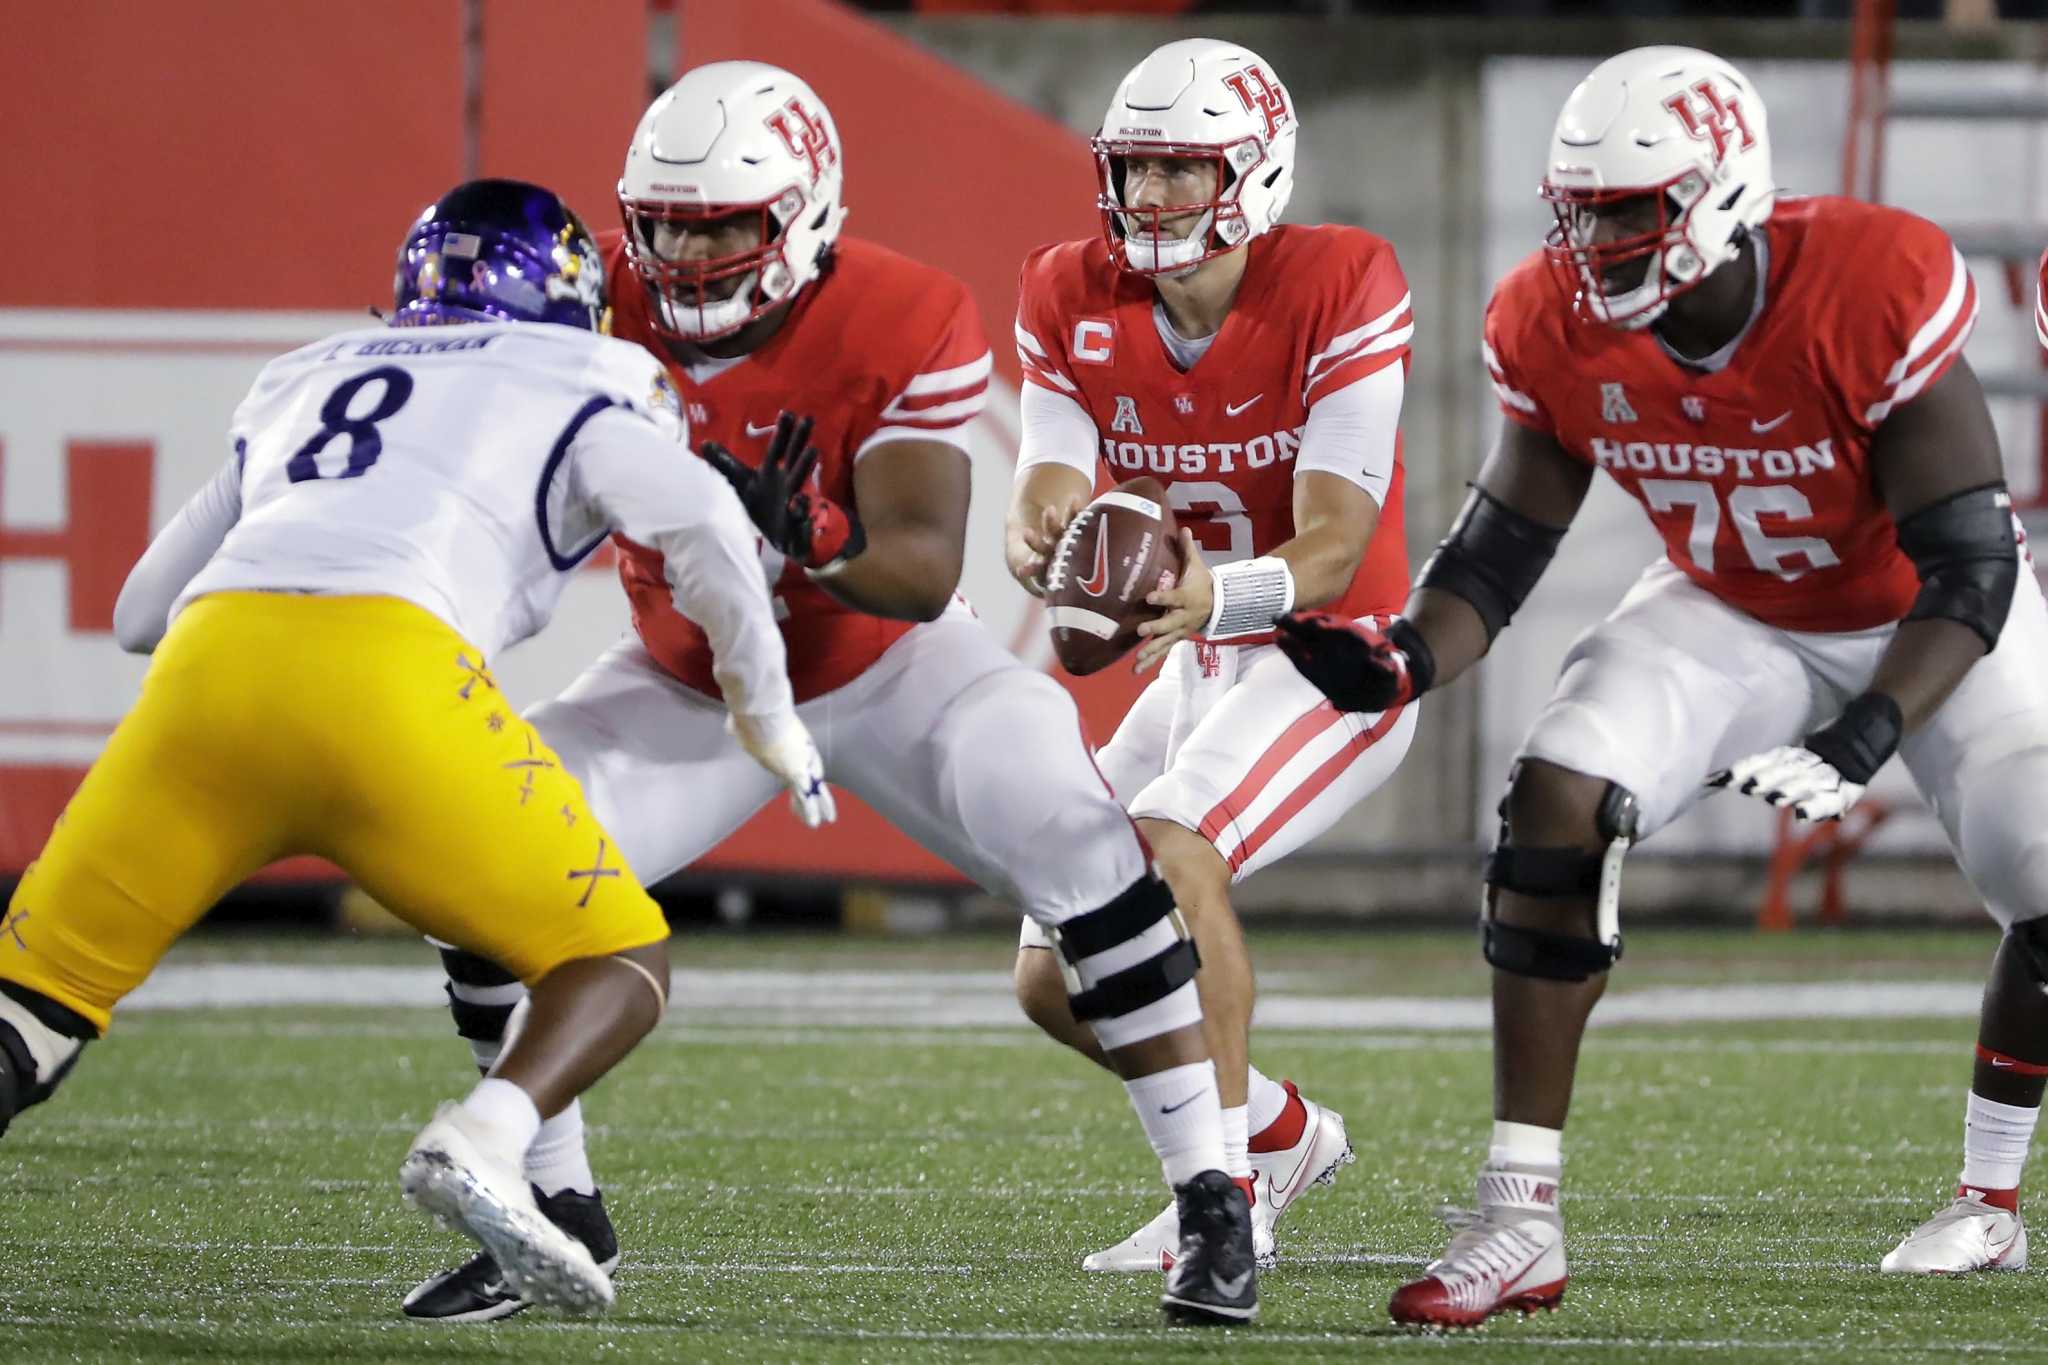 University of Houston Football success starts up front on offense